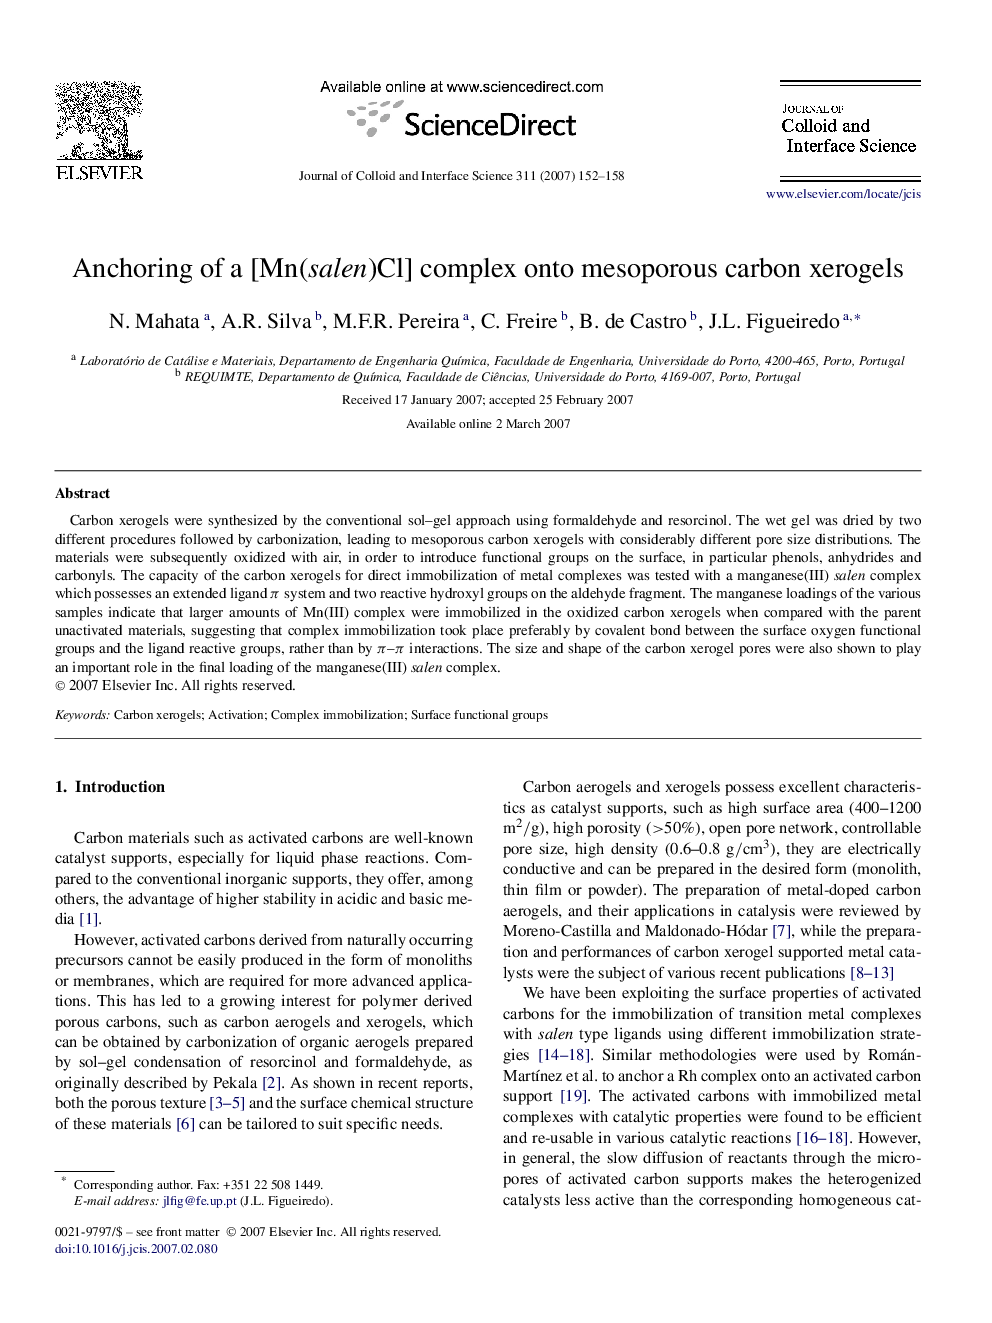 Anchoring of a [Mn(salen)Cl] complex onto mesoporous carbon xerogels